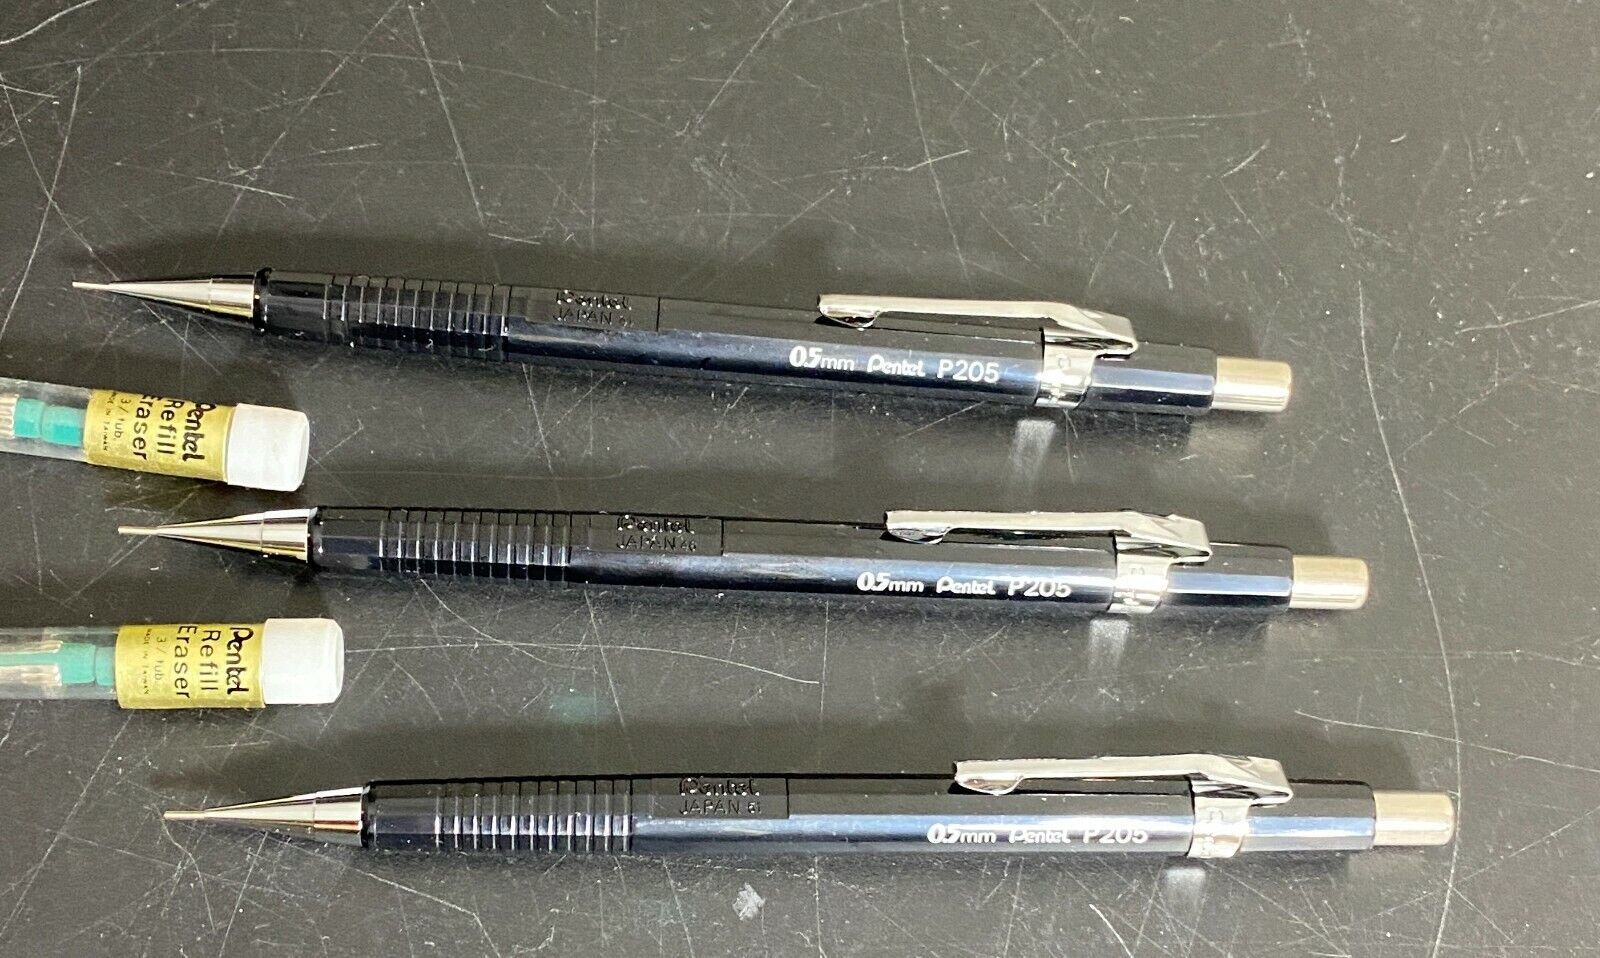 Pentel Pencils 0.5mm  P205  JAPAN with eraser refill 3- 1970s - $39.60